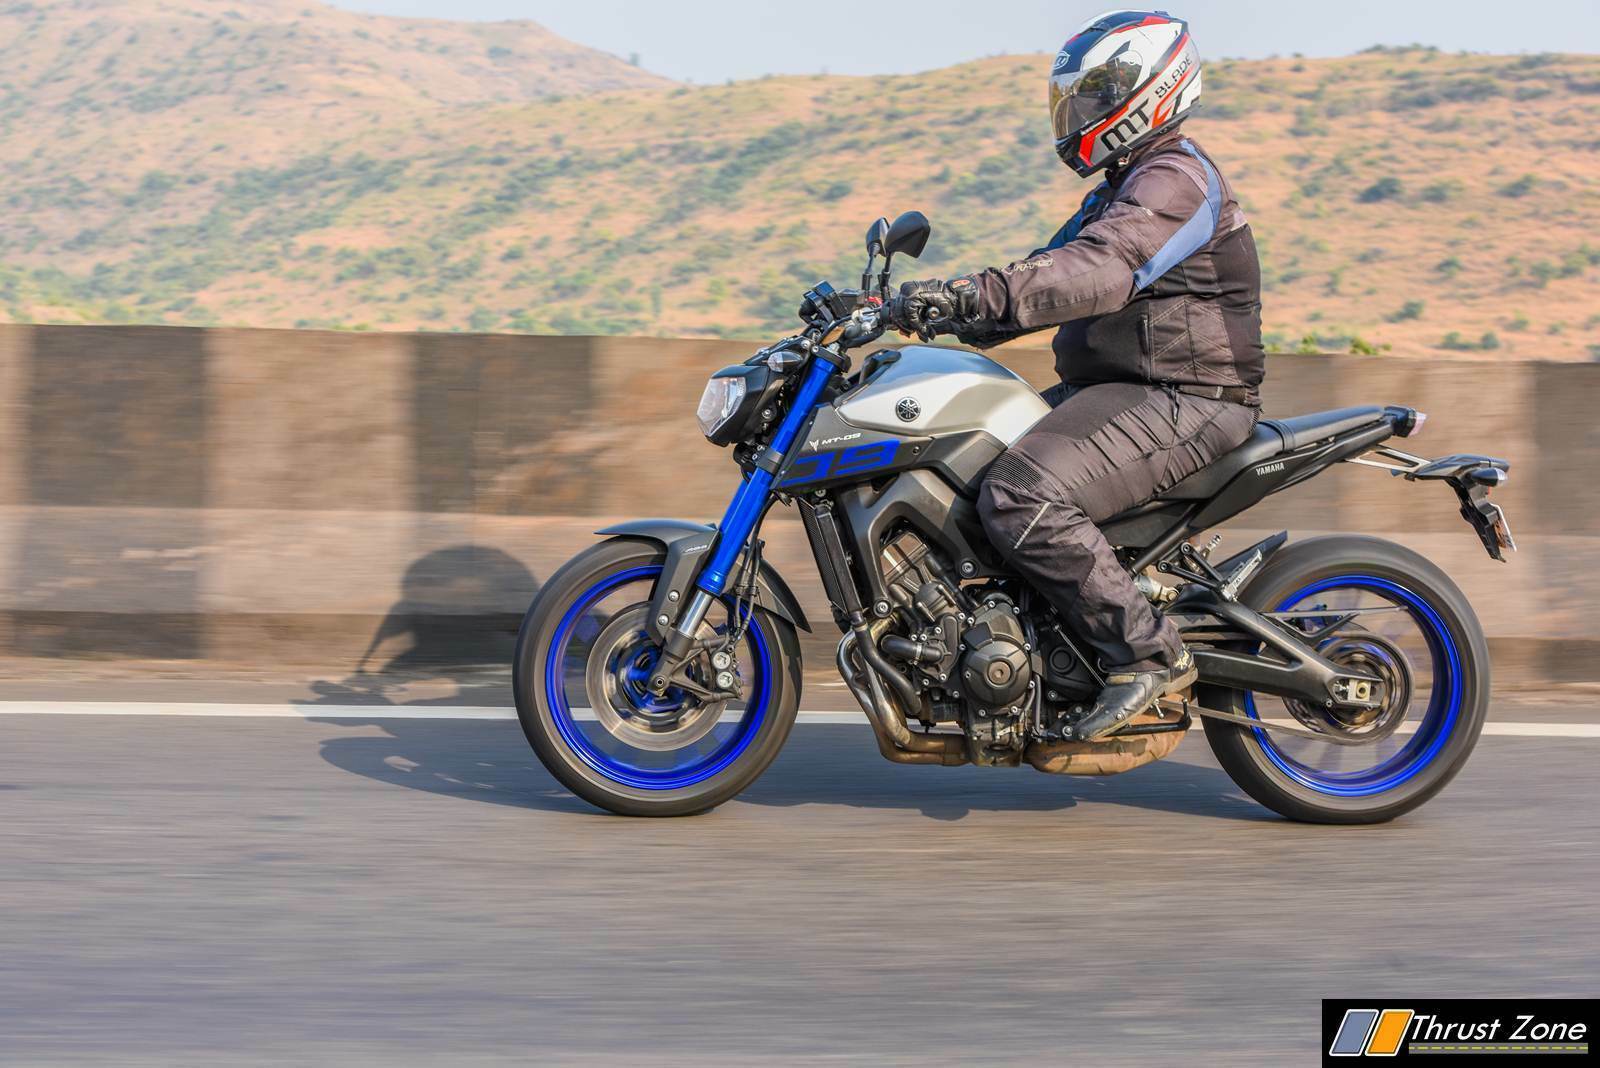 https://www.thrustzone.com/wp-content/uploads/2017/11/Yamaha-MT-09-India-Ride-Review-3.jpg